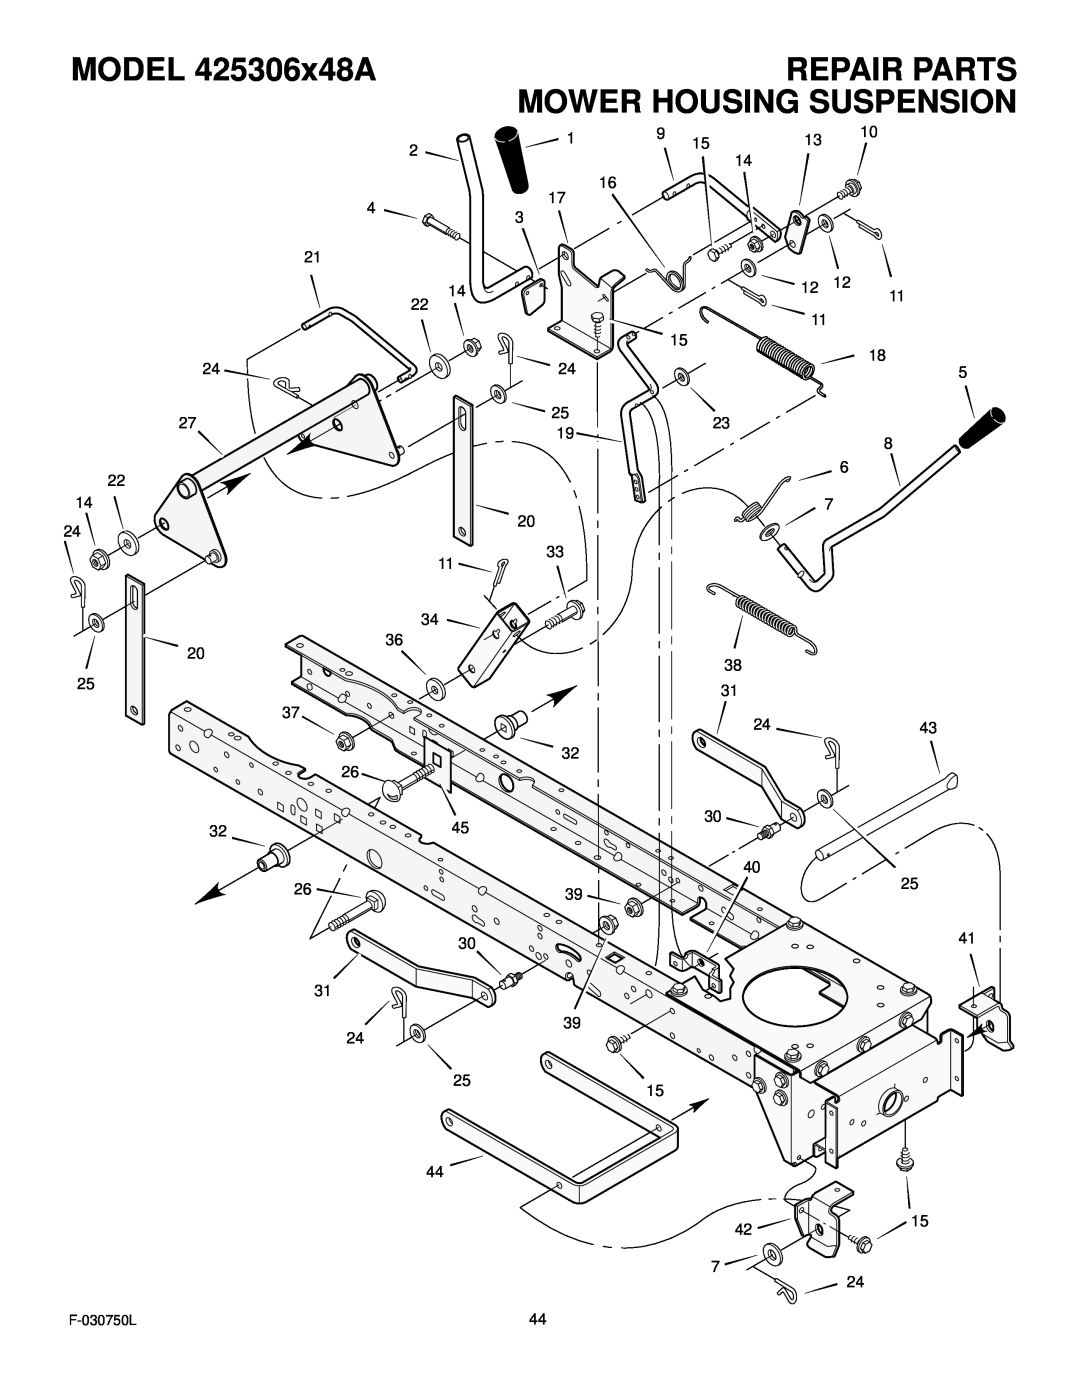 Murray manual Mower Housing Suspension, MODEL 425306x48A, Repair Parts, F-030750L 